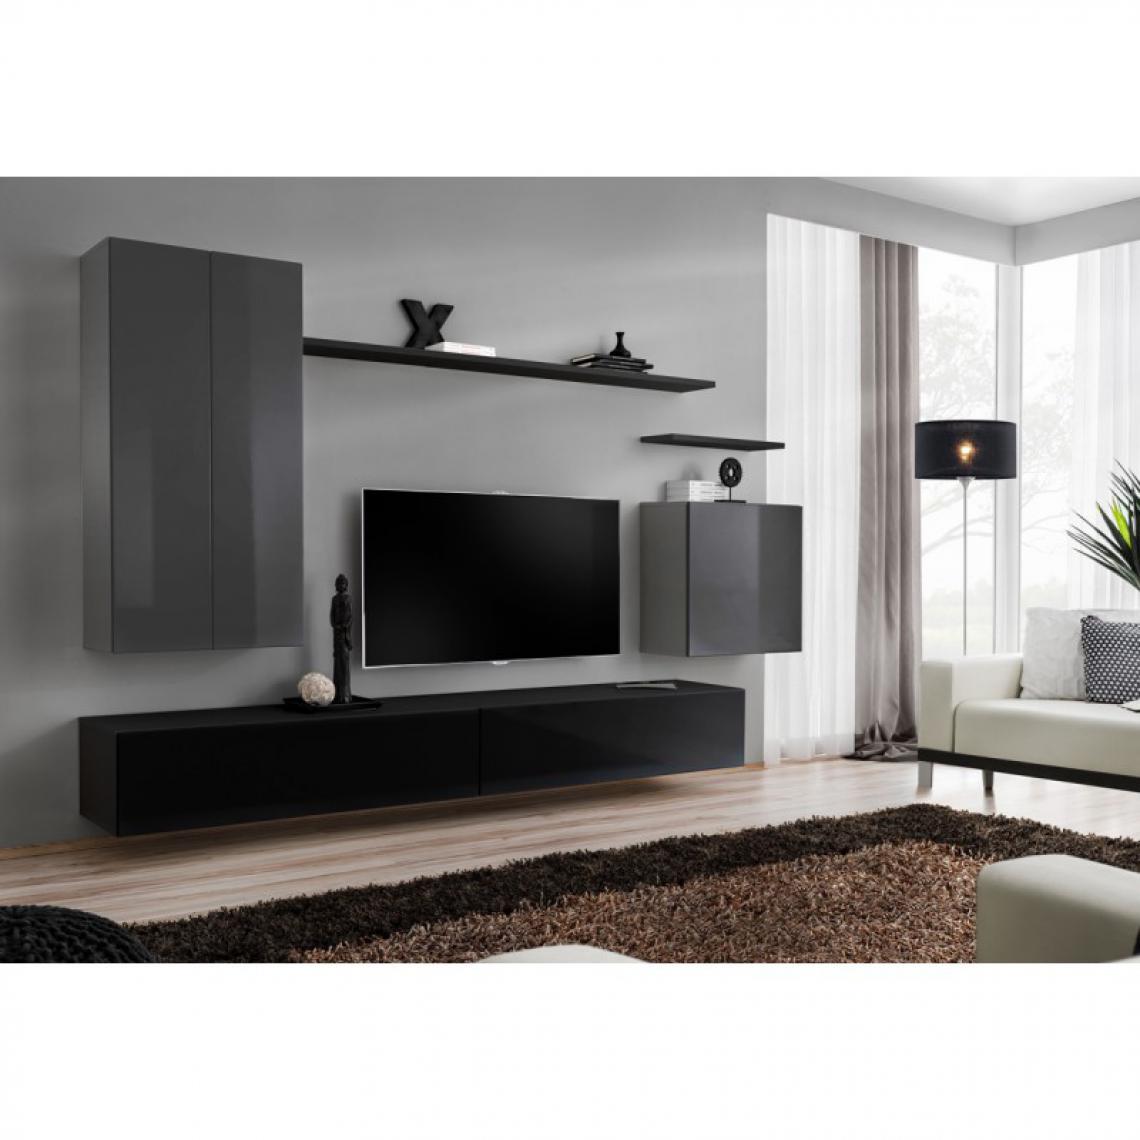 Ac-Deco - Meuble TV Mural Design Switch II 270cm Gris & Noir - Meubles TV, Hi-Fi